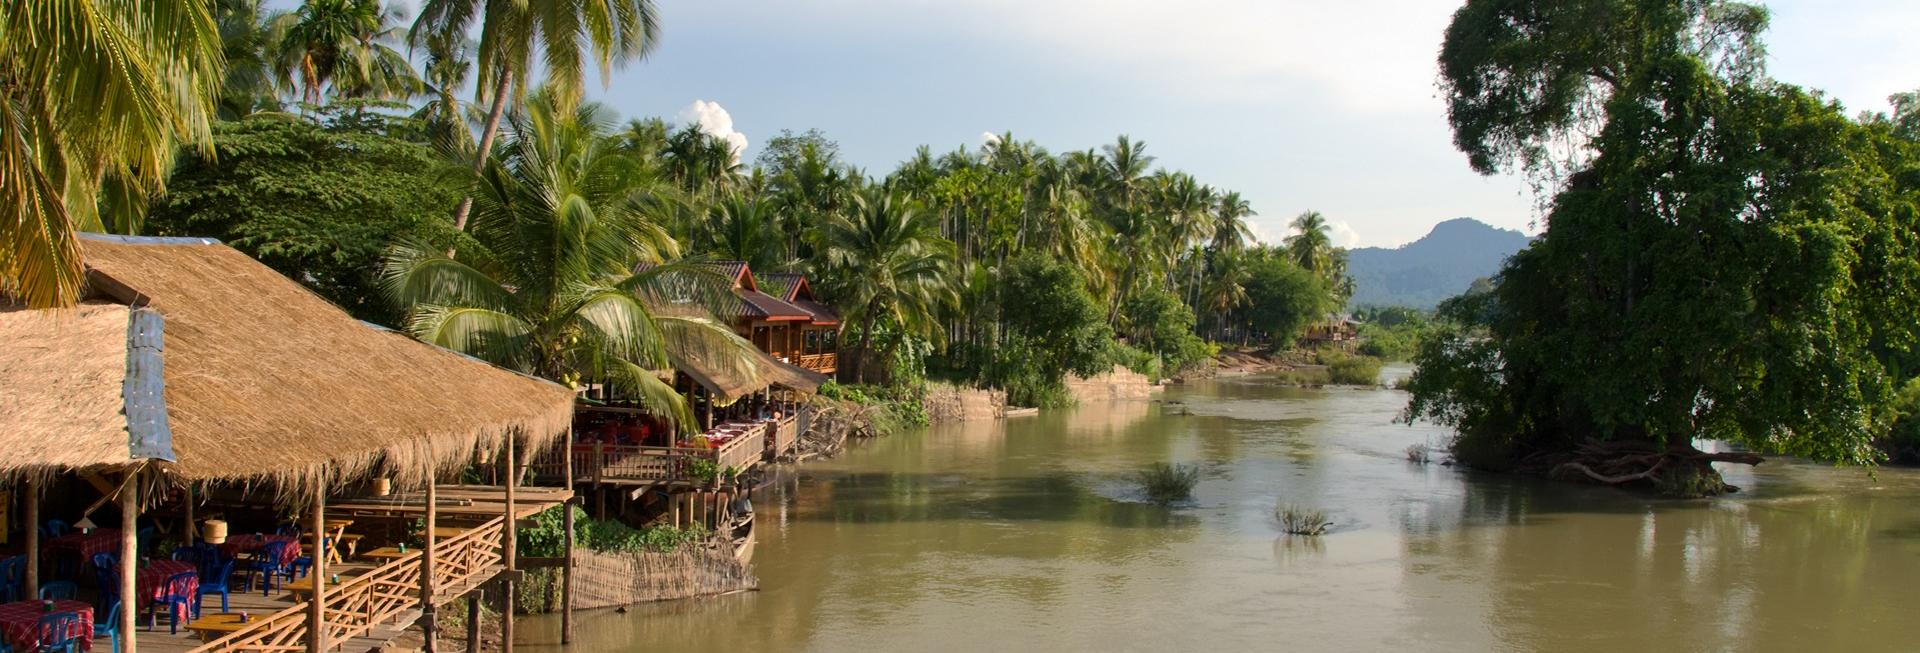 4000 Islands, Laos